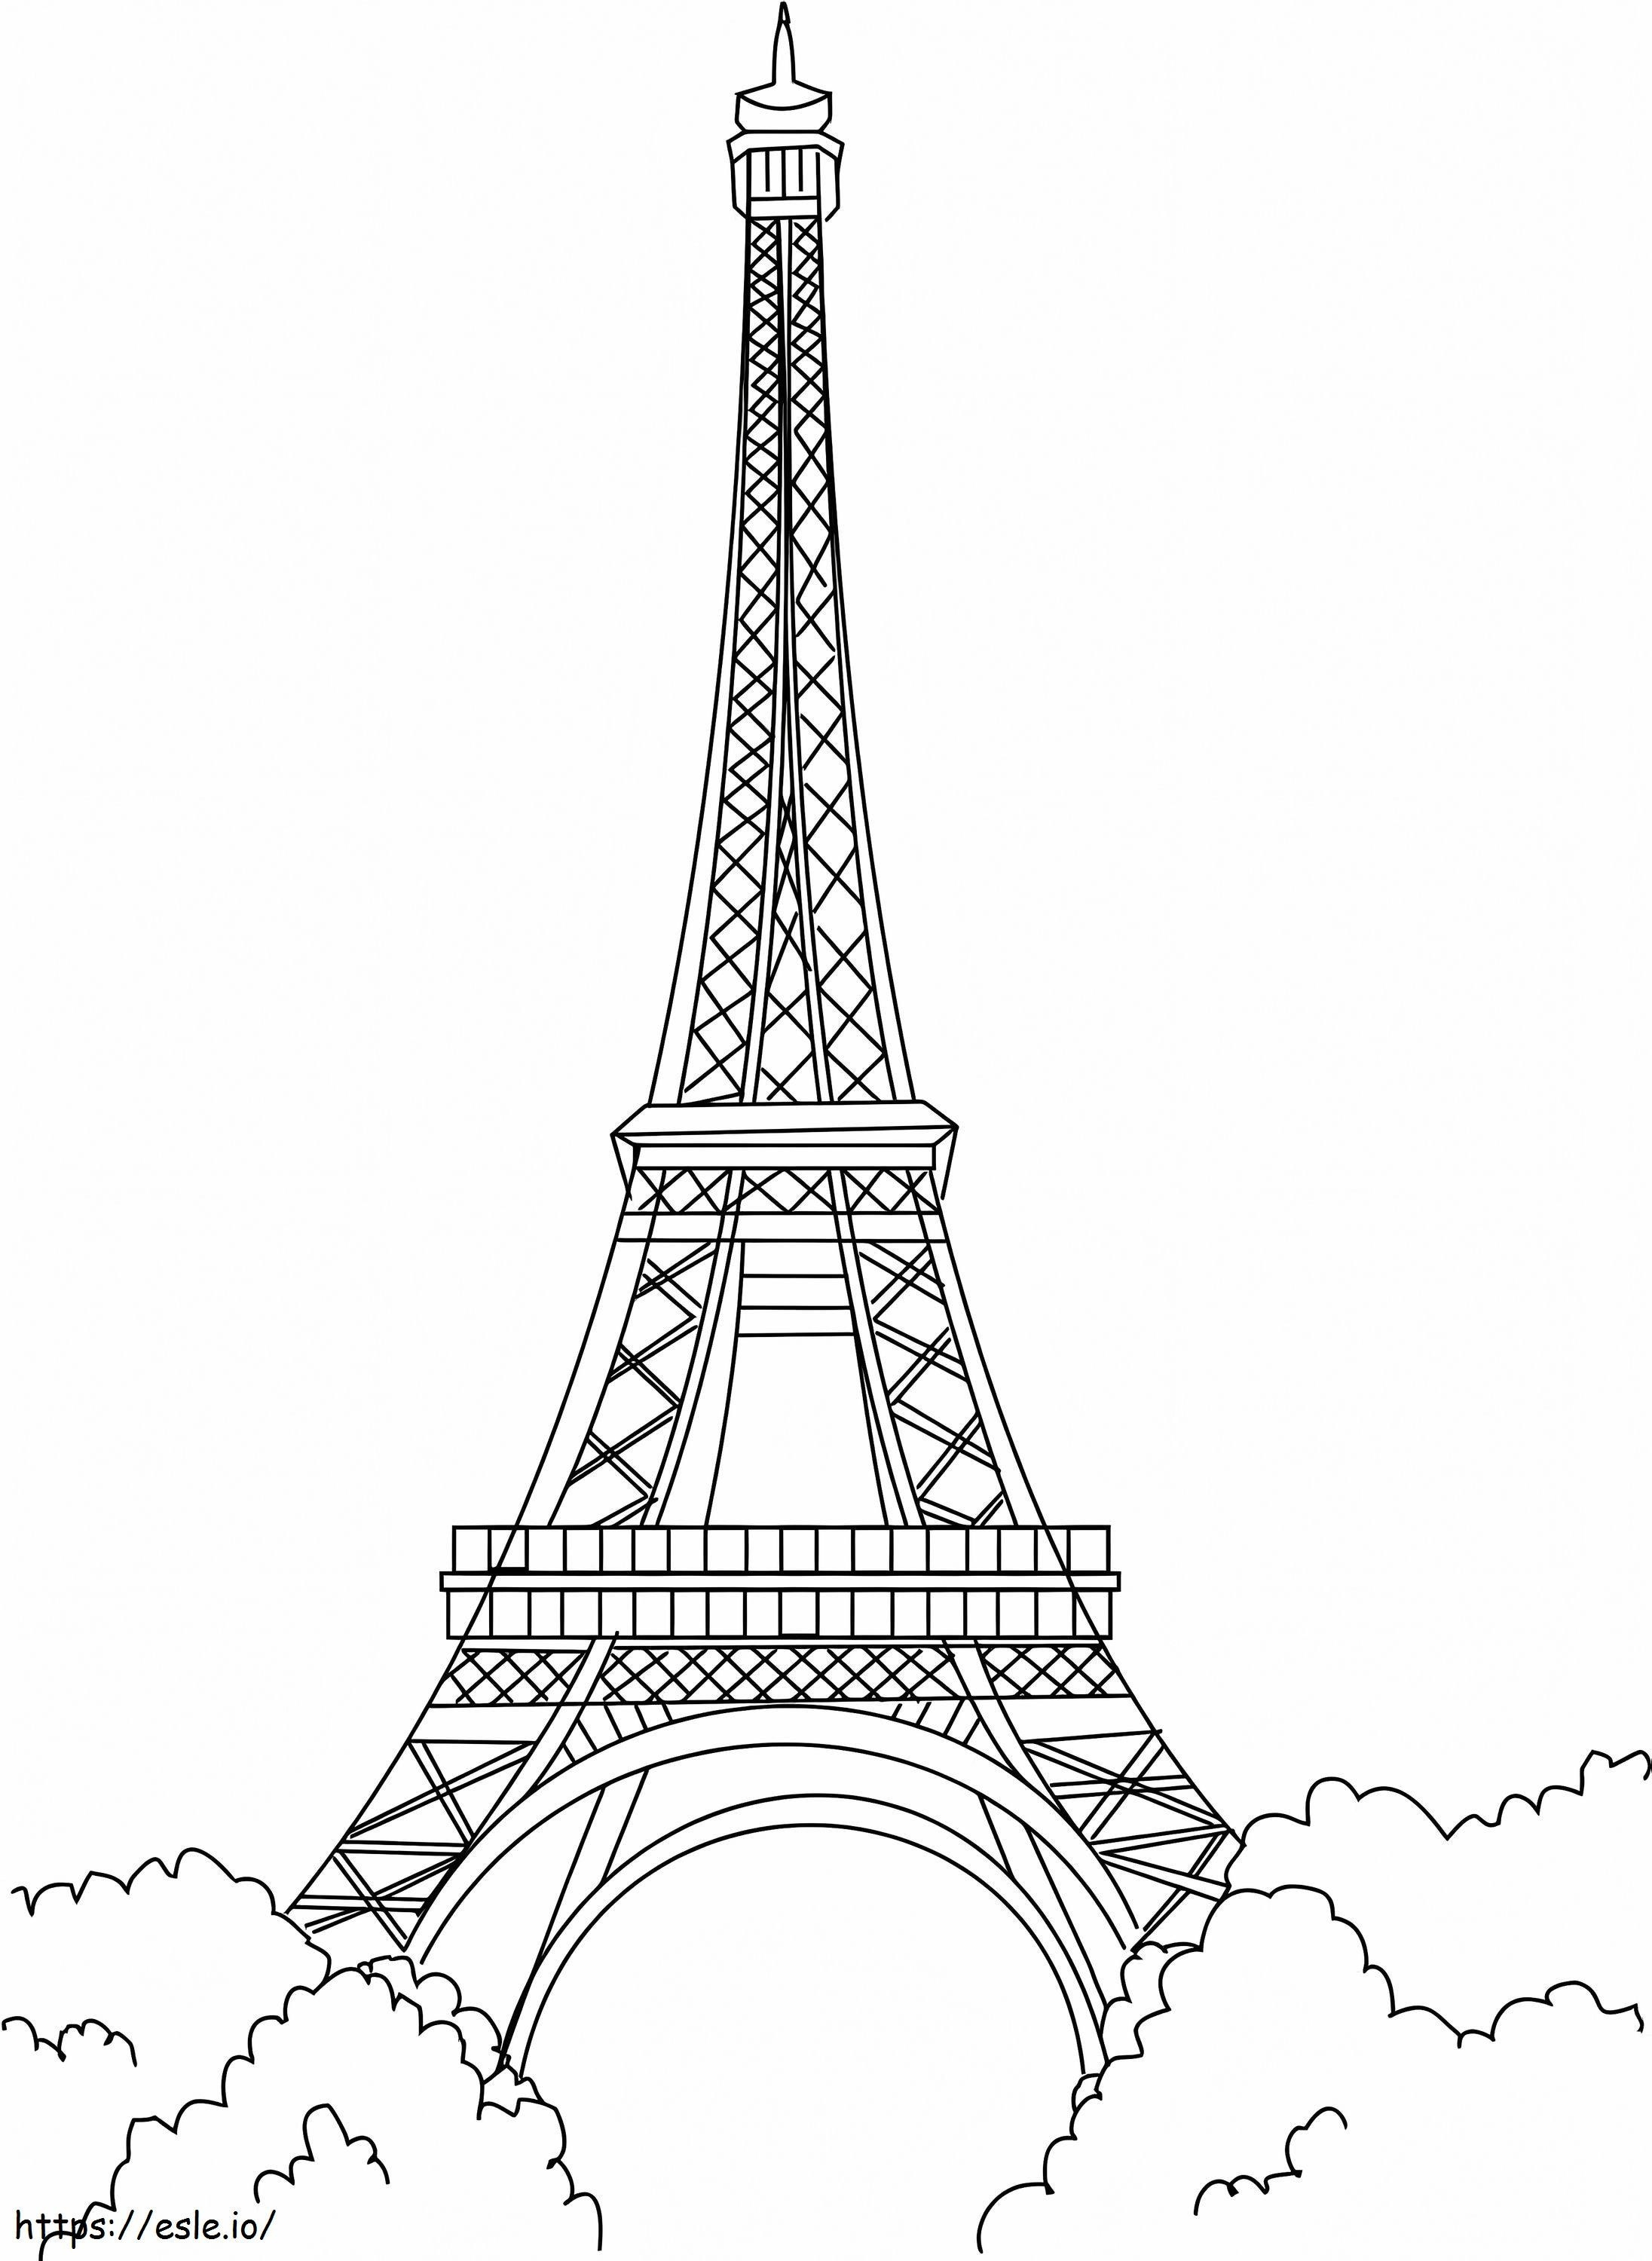 Normaler Eiffelturm in Paris ausmalbilder